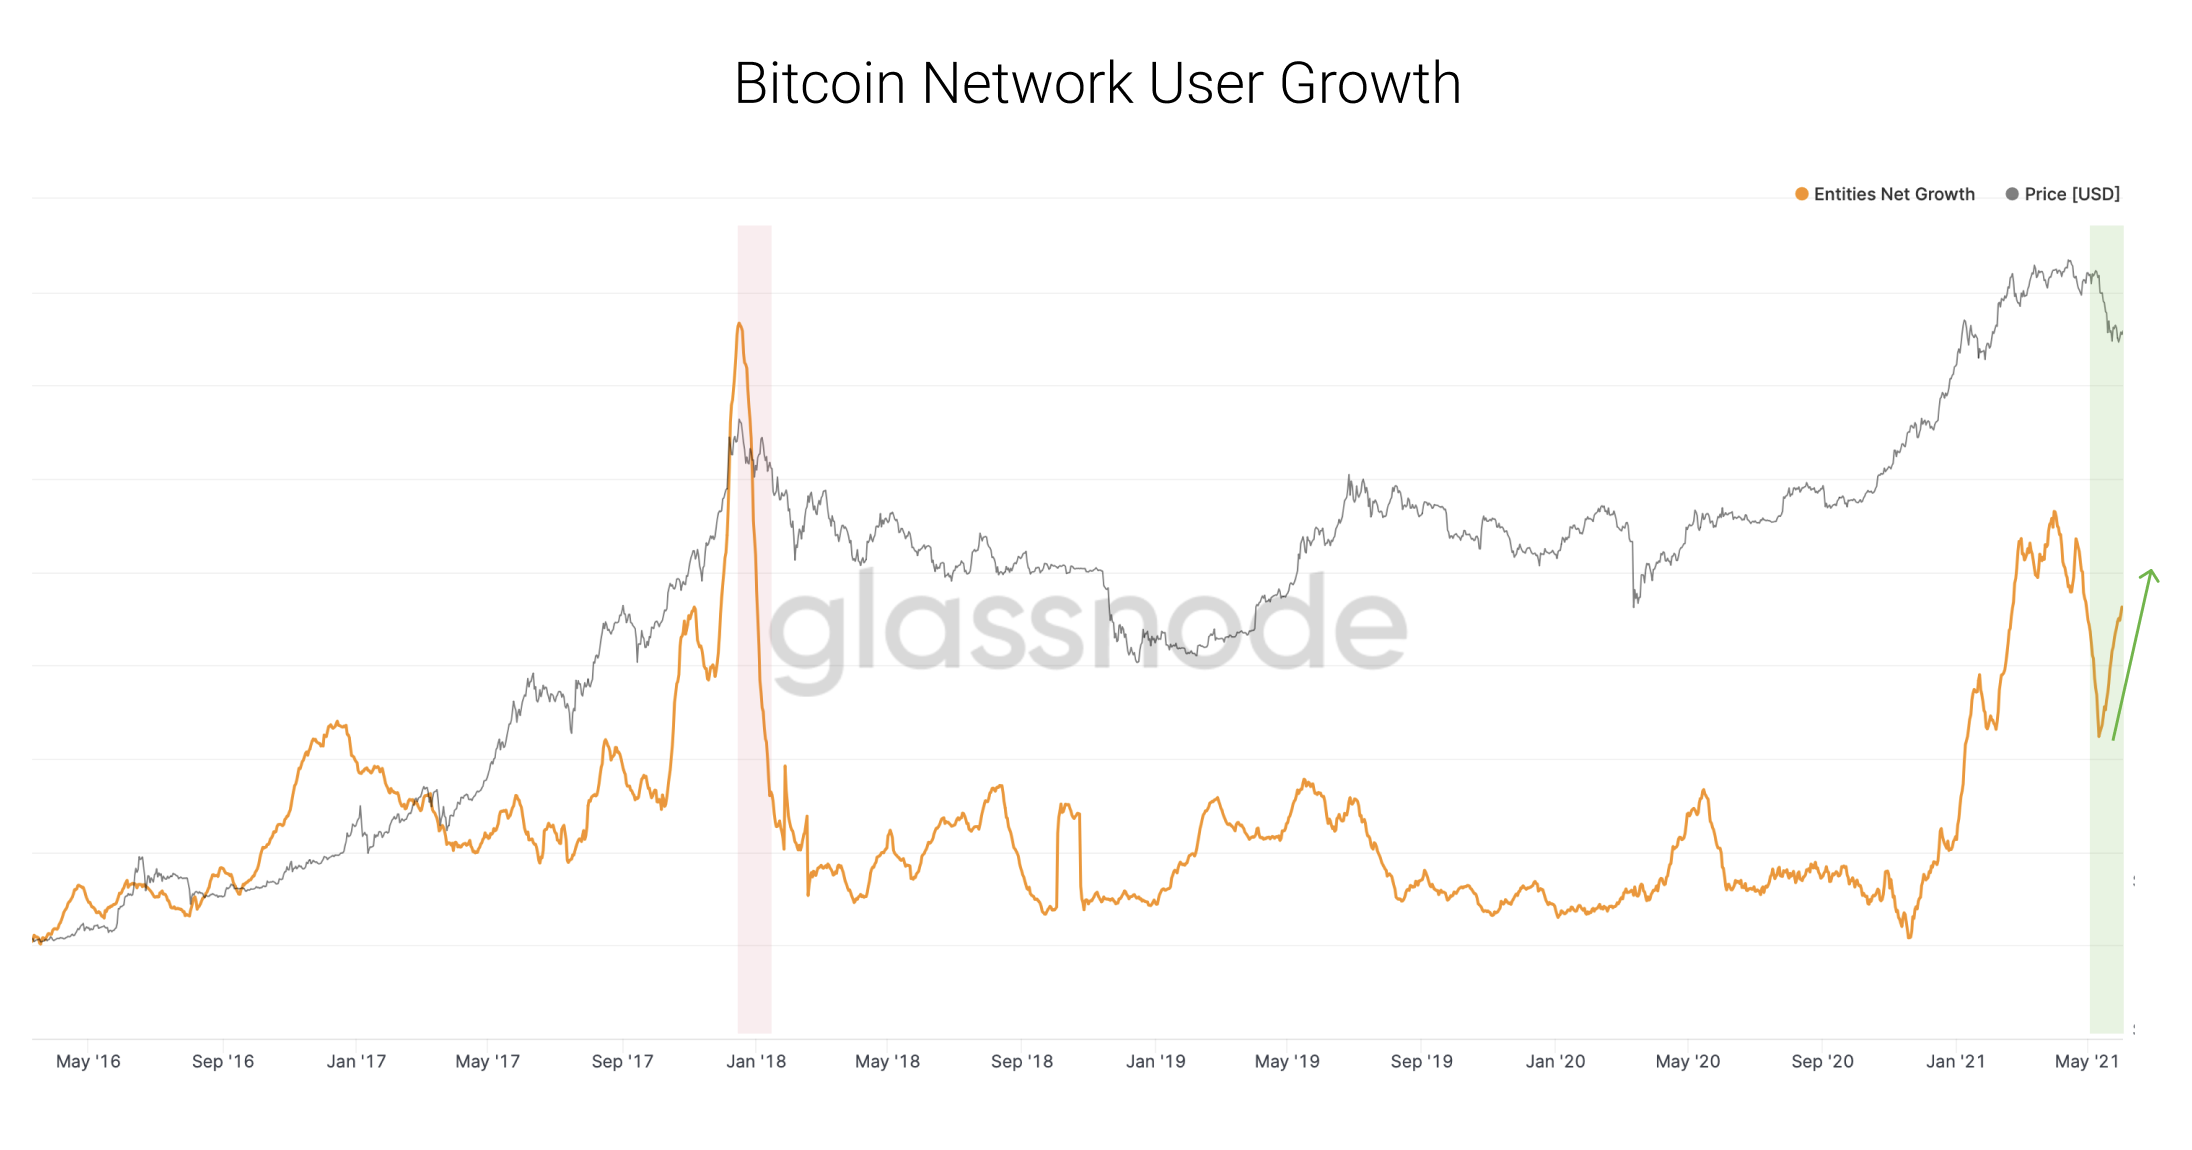 BTC network user growth chart